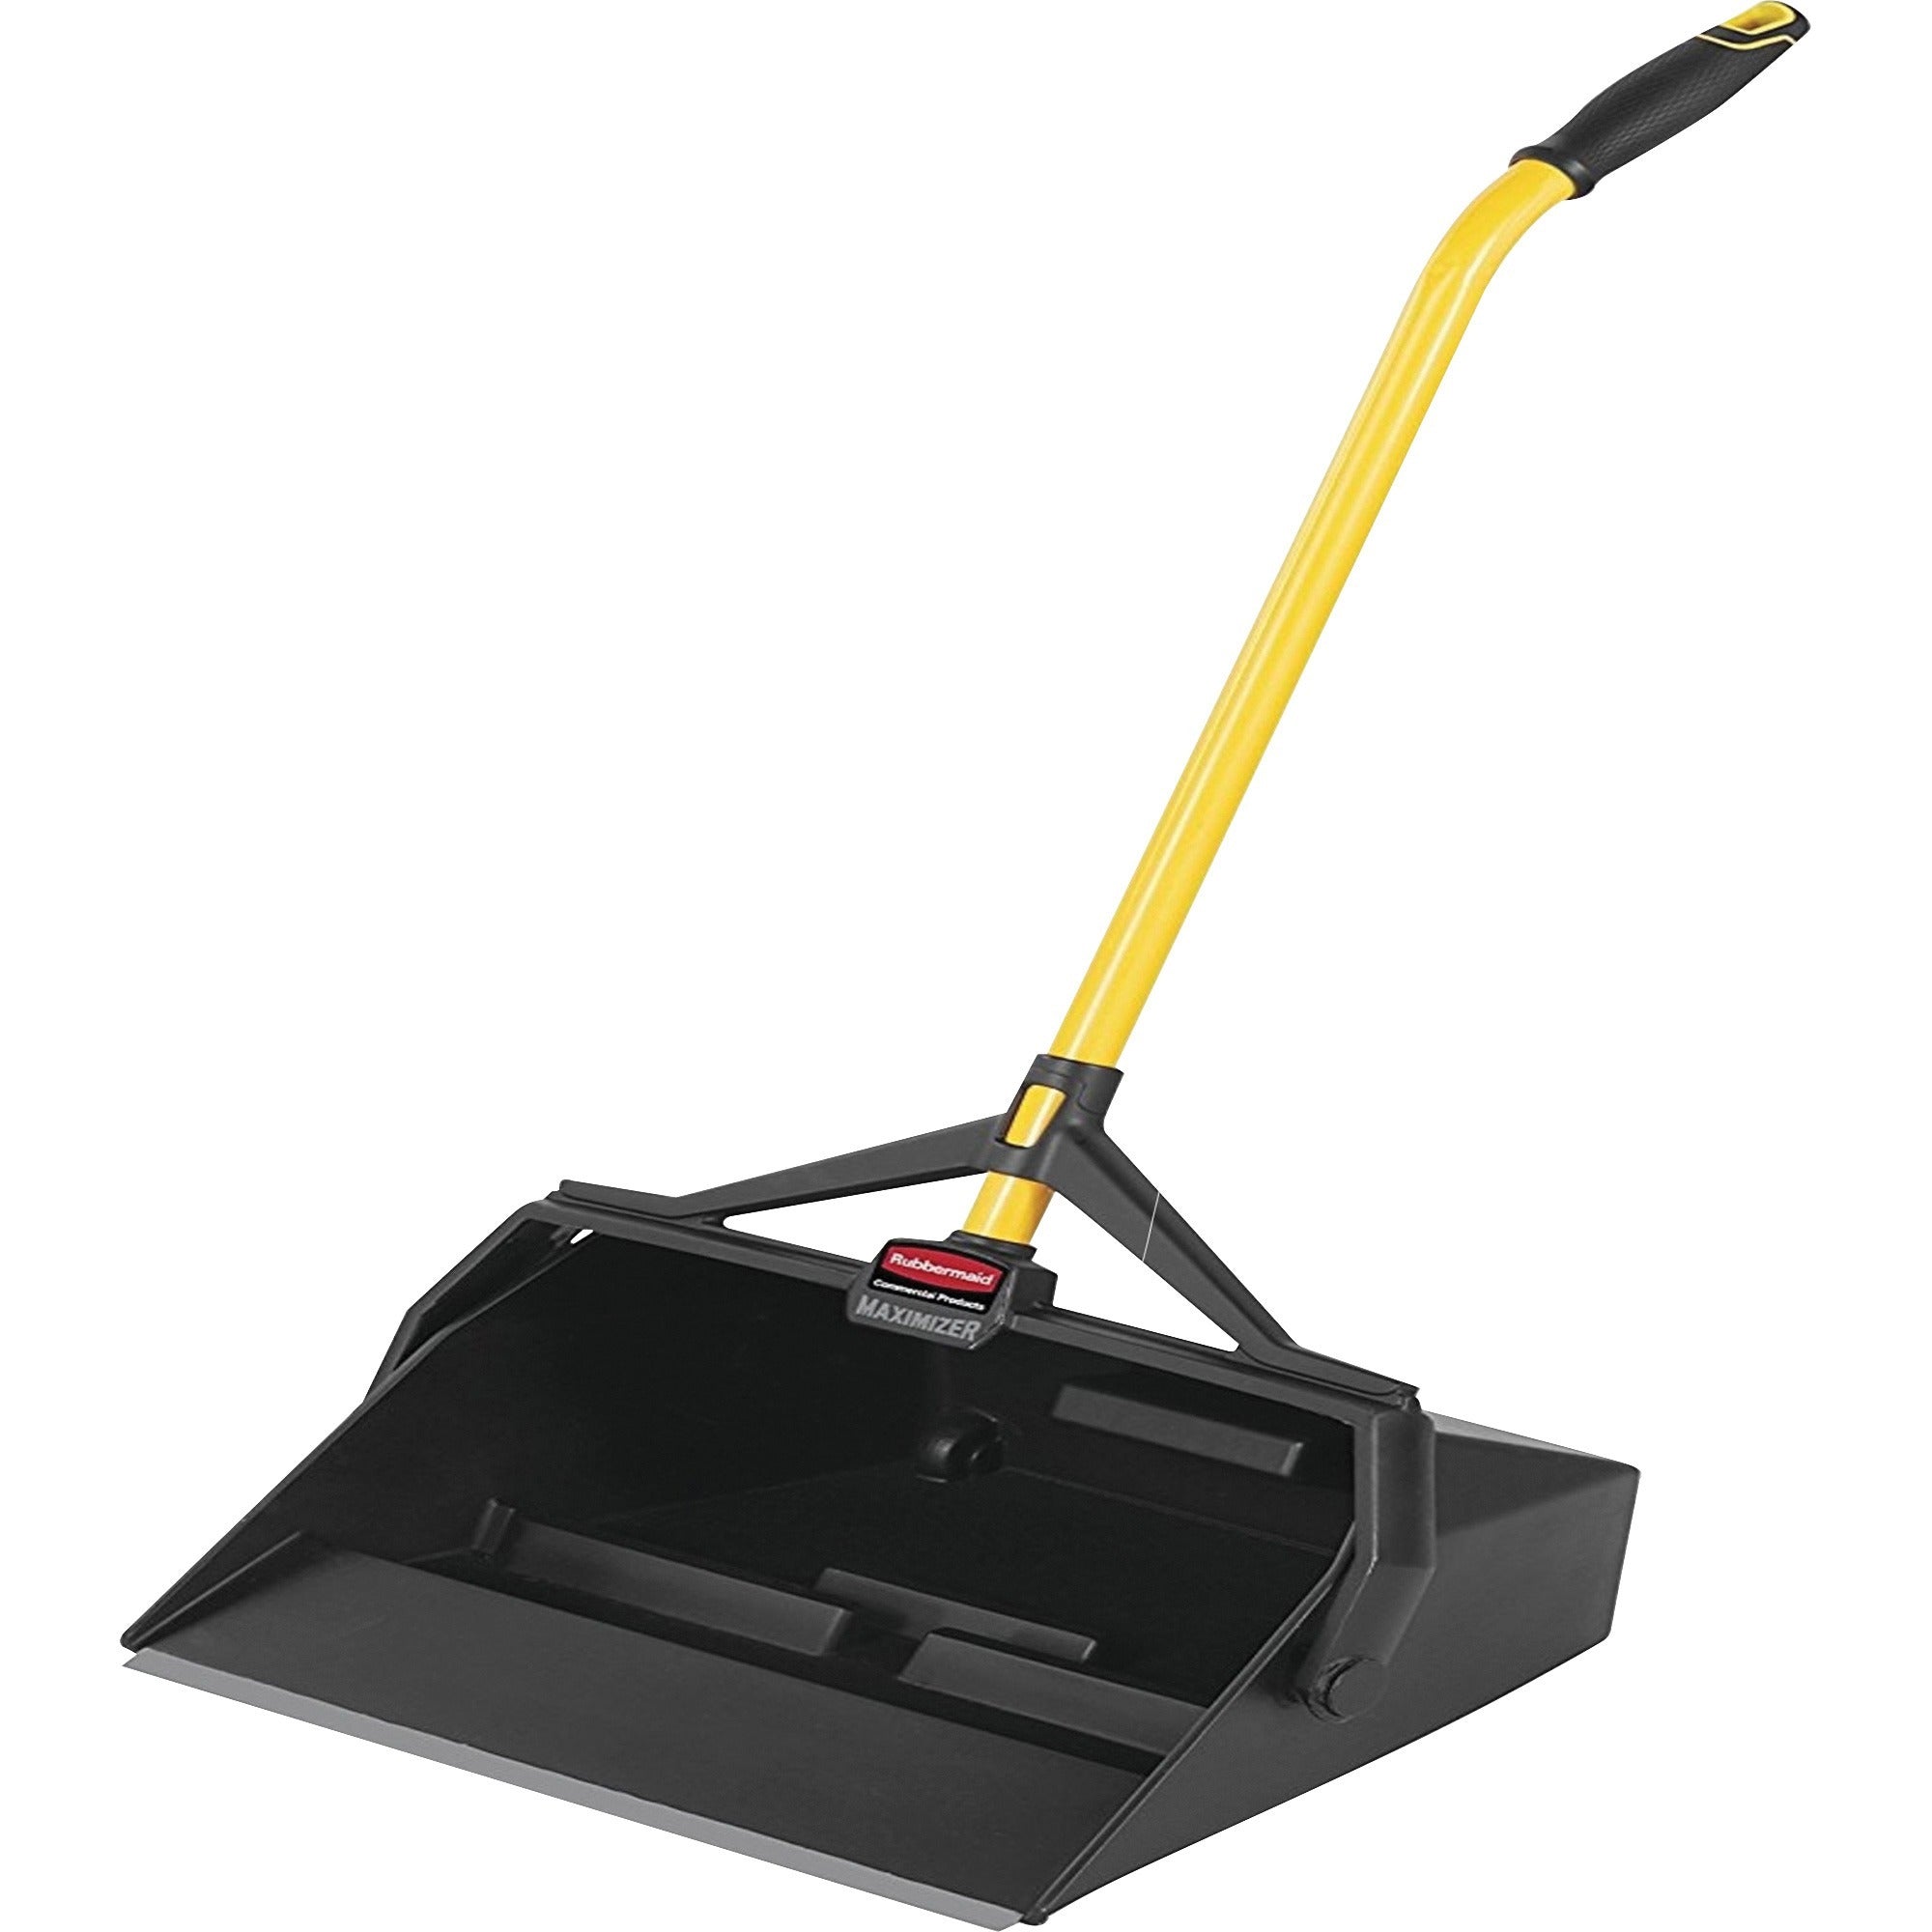 rubbermaid-commercial-maximizer-wet-dry-debris-pan-polypropylene-black-yellow-6-carton_rcp2018806ct - 2